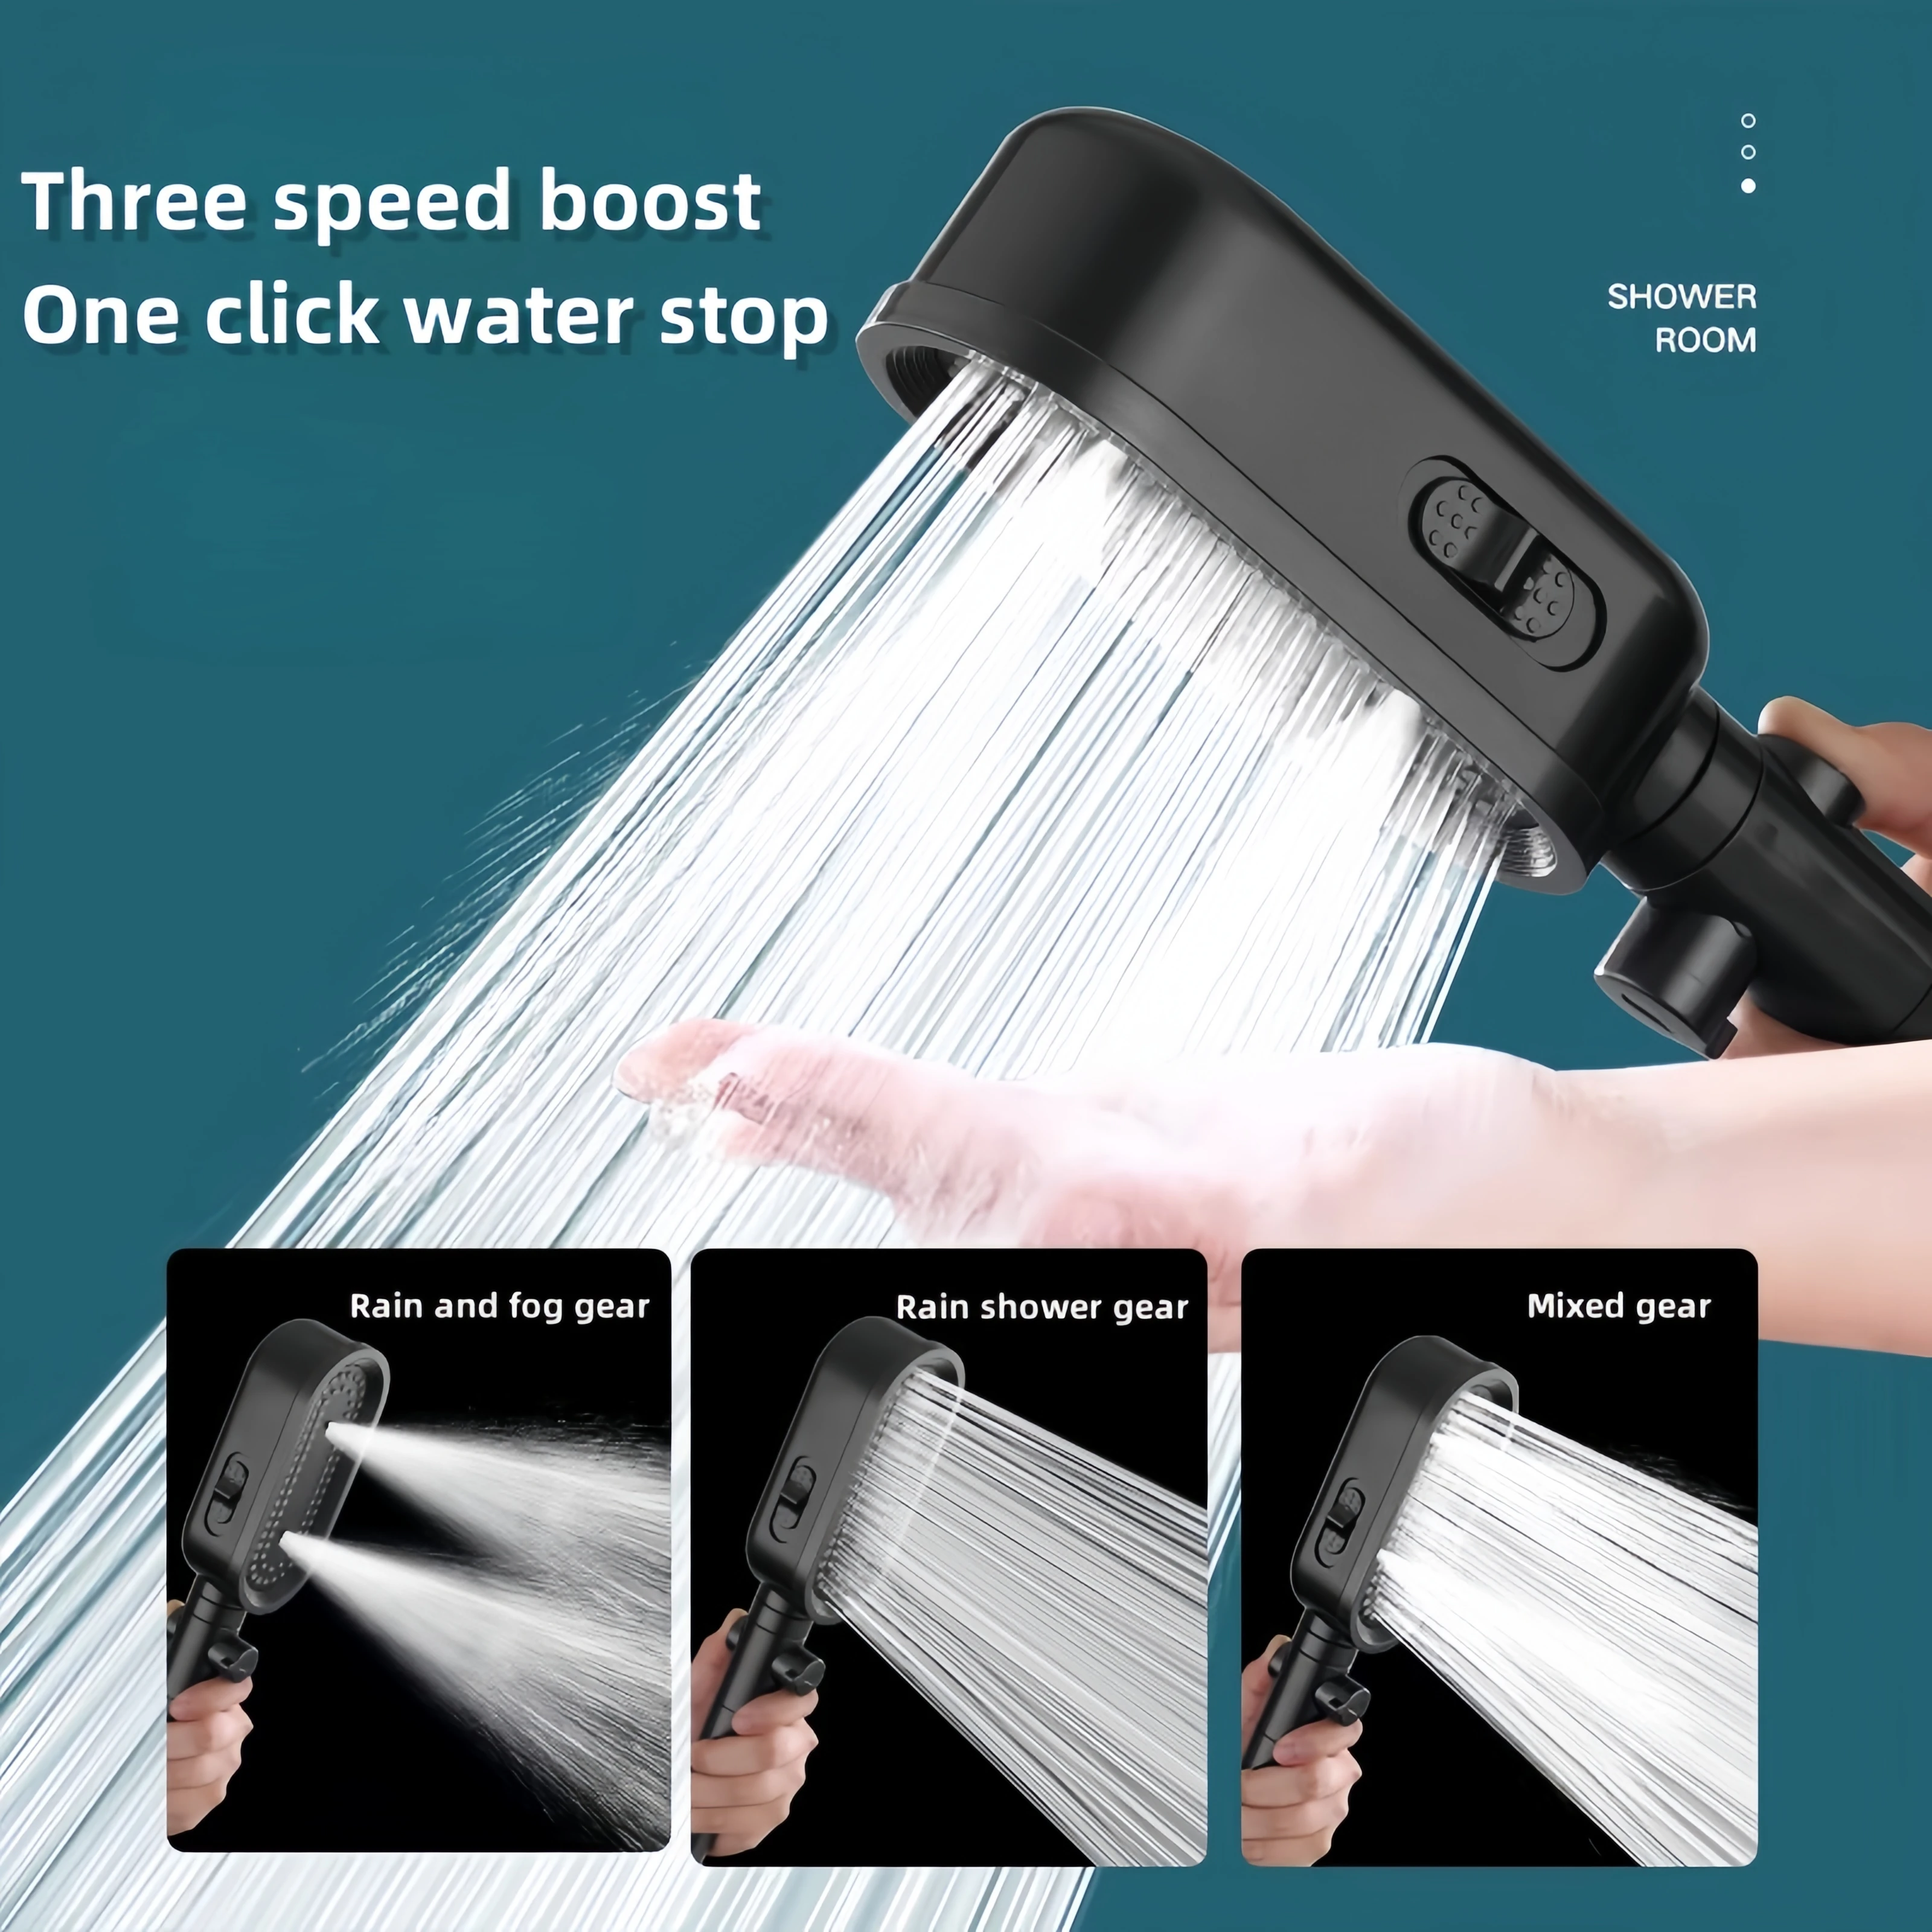 Household Pressurized Shower Handheld Three-Speed Filtered Showerhead  Bathroom Water Heater Shower Nozzle Shower Accessories